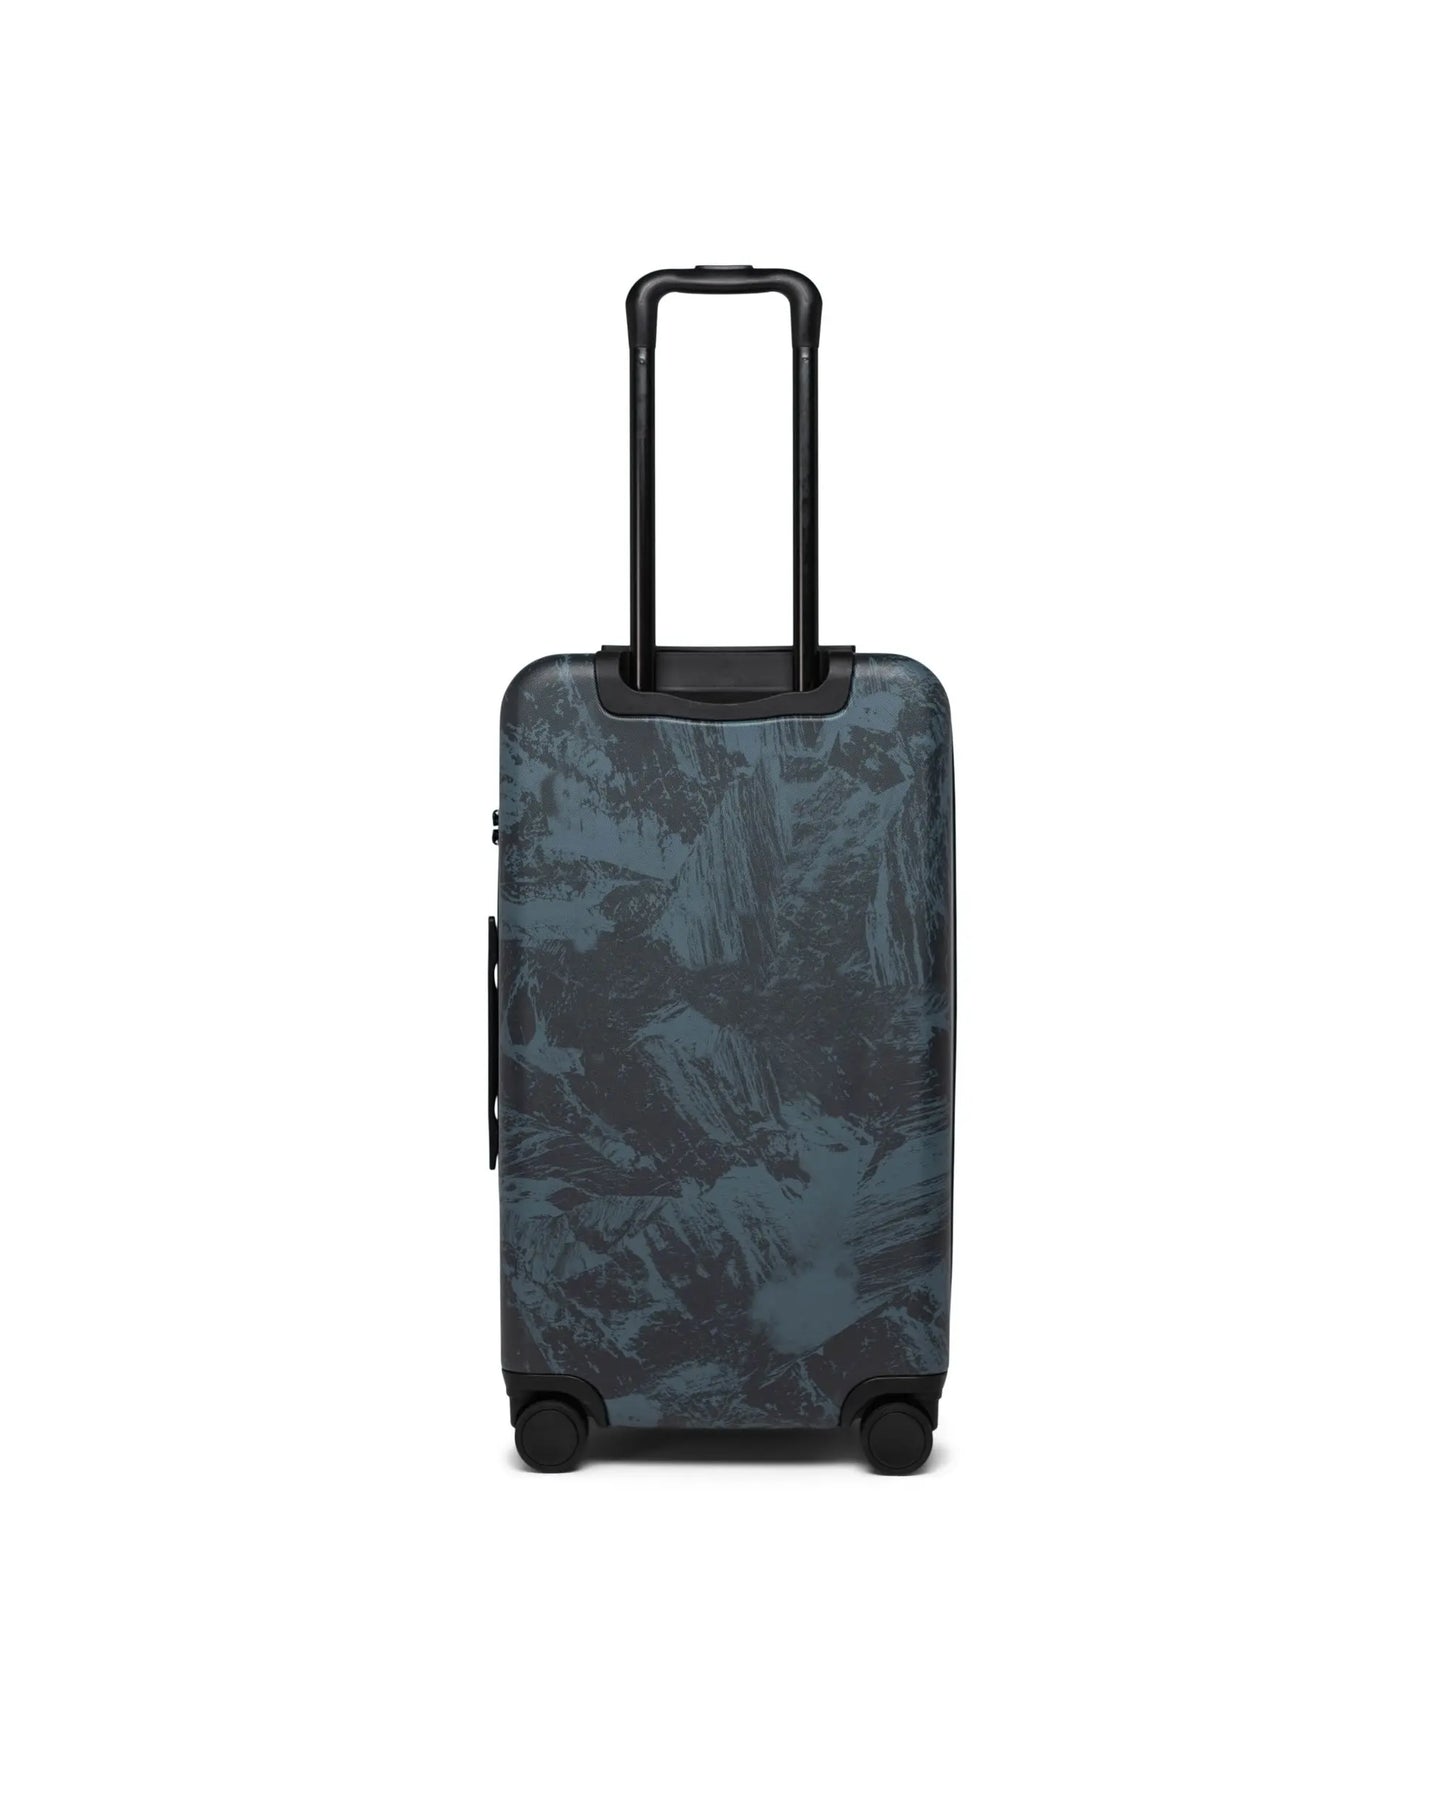 Herschel  "Heritage Hardshell Medium Luggage" - Steel Blue Shale Rock